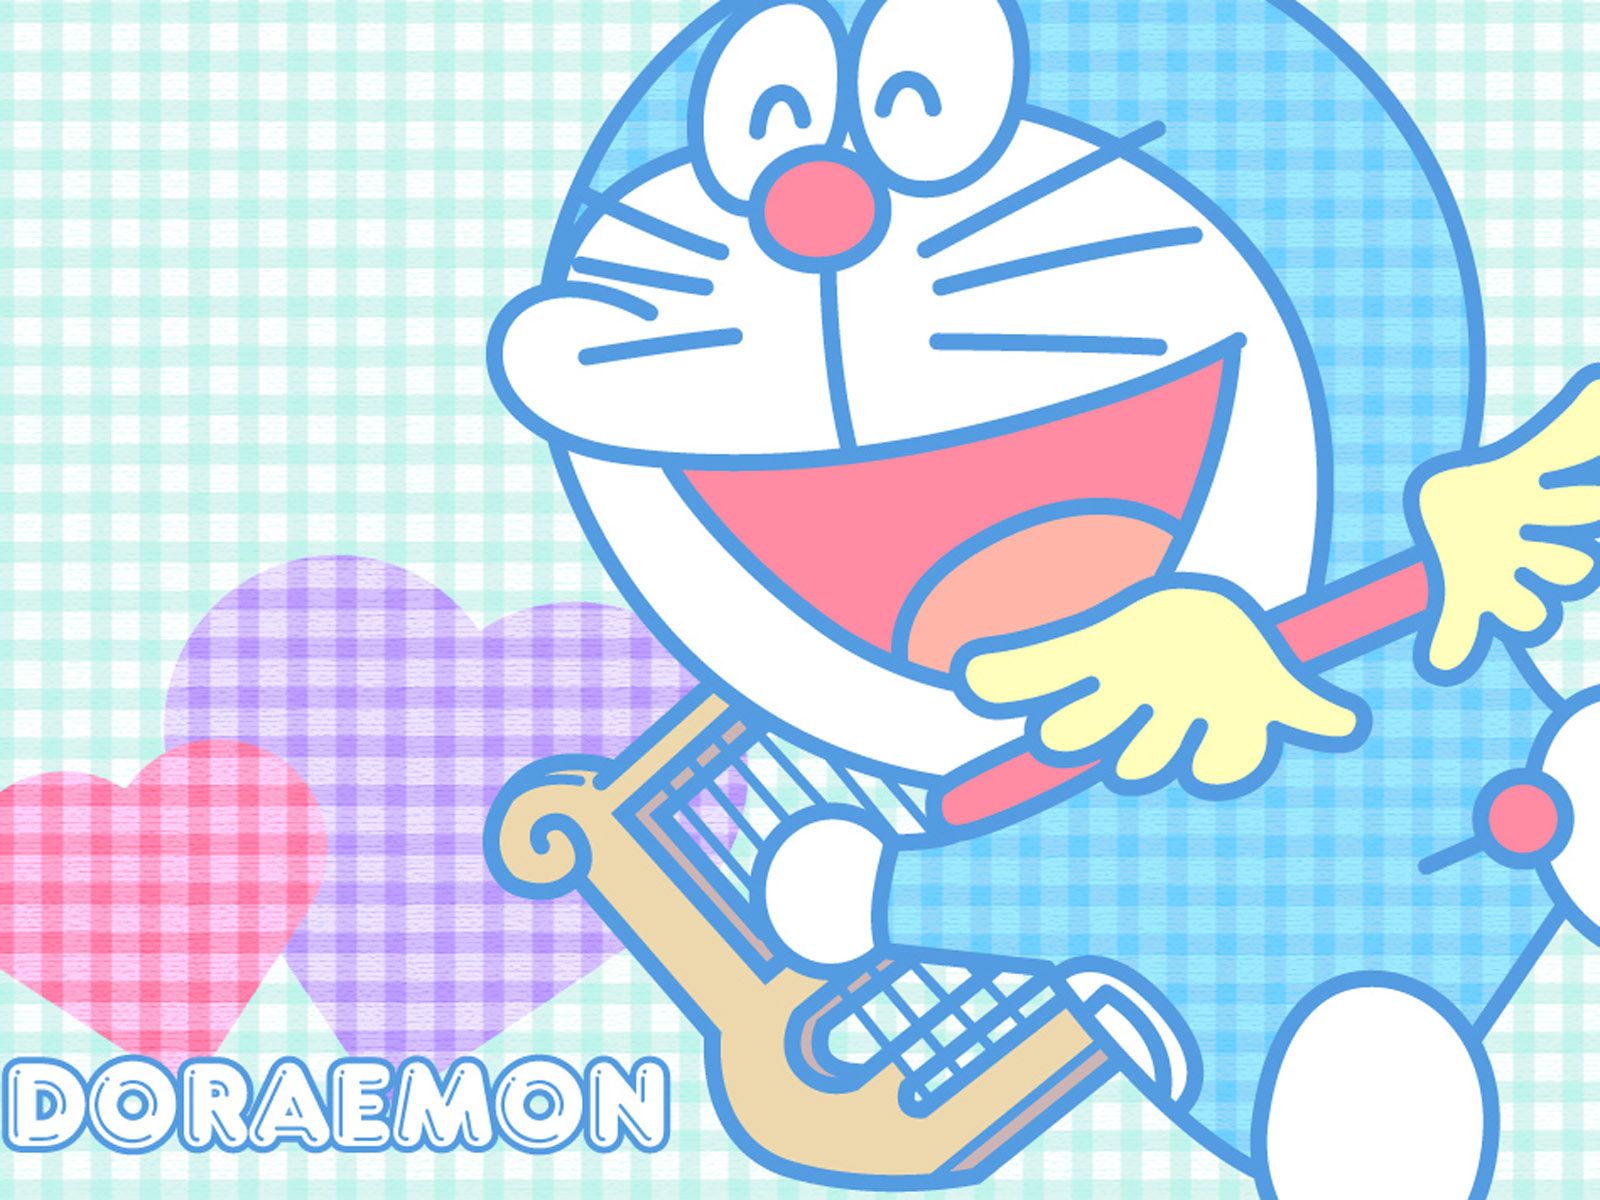 Doraemon wallpaper free download Wallpapers - Free doraemon